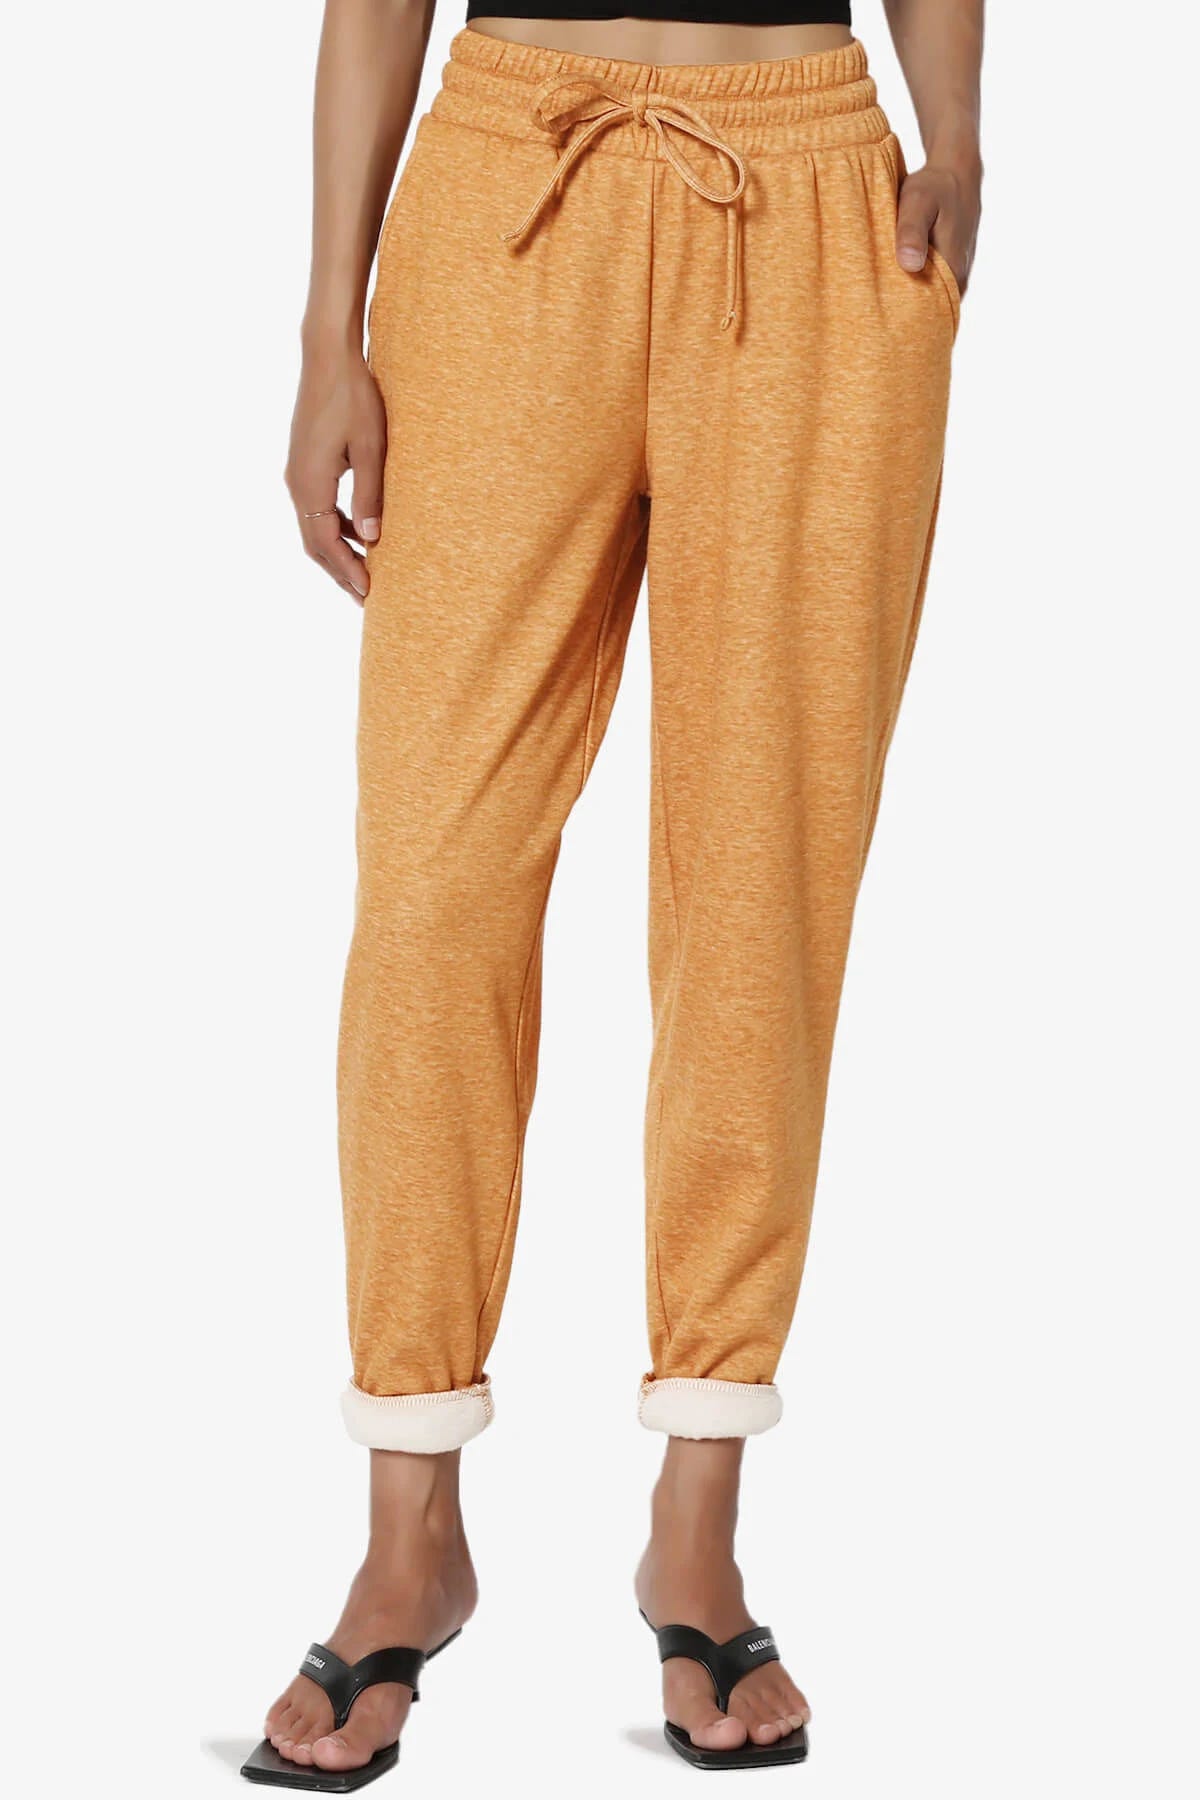 Yellow High-Waist Fleece Jogger Pants for Women | Image